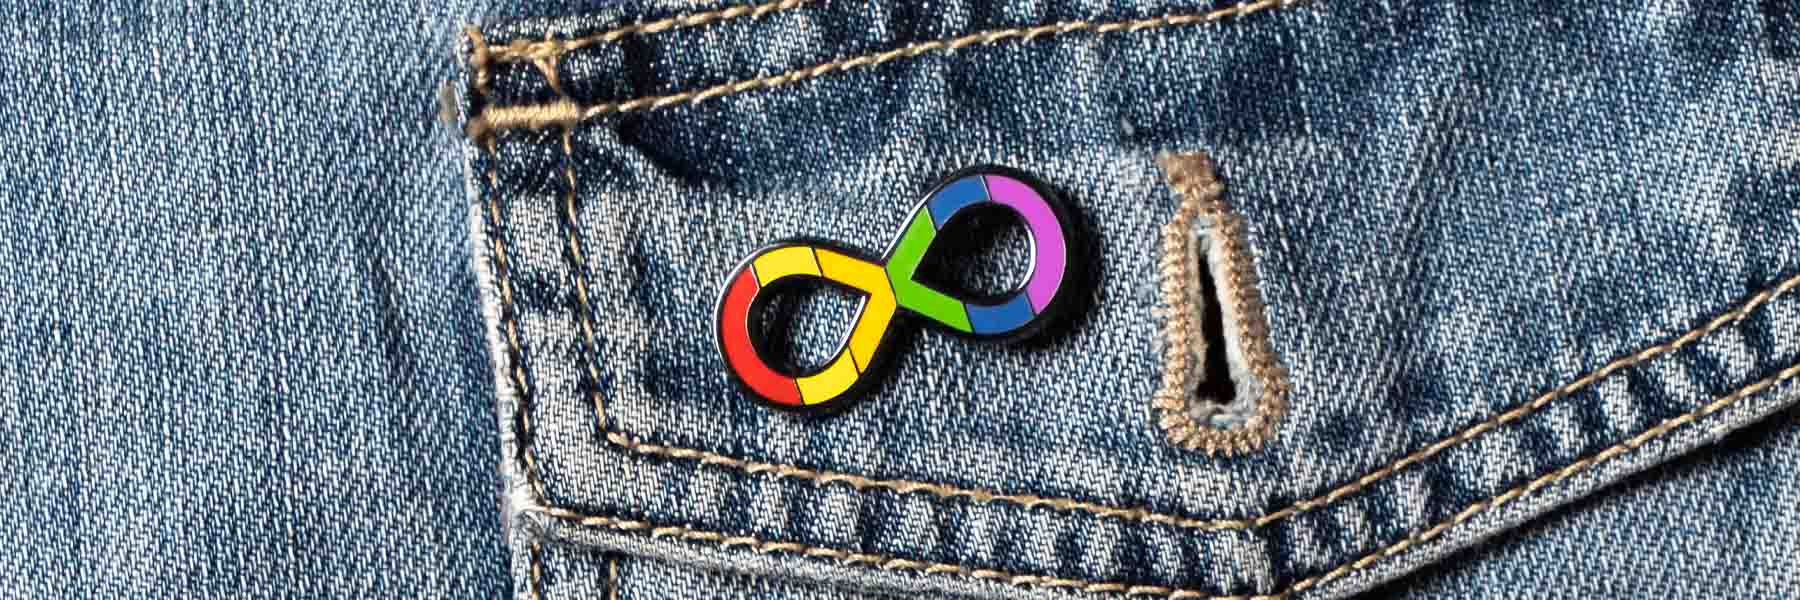 A rainbow infinity symbol pin on a denim jacket